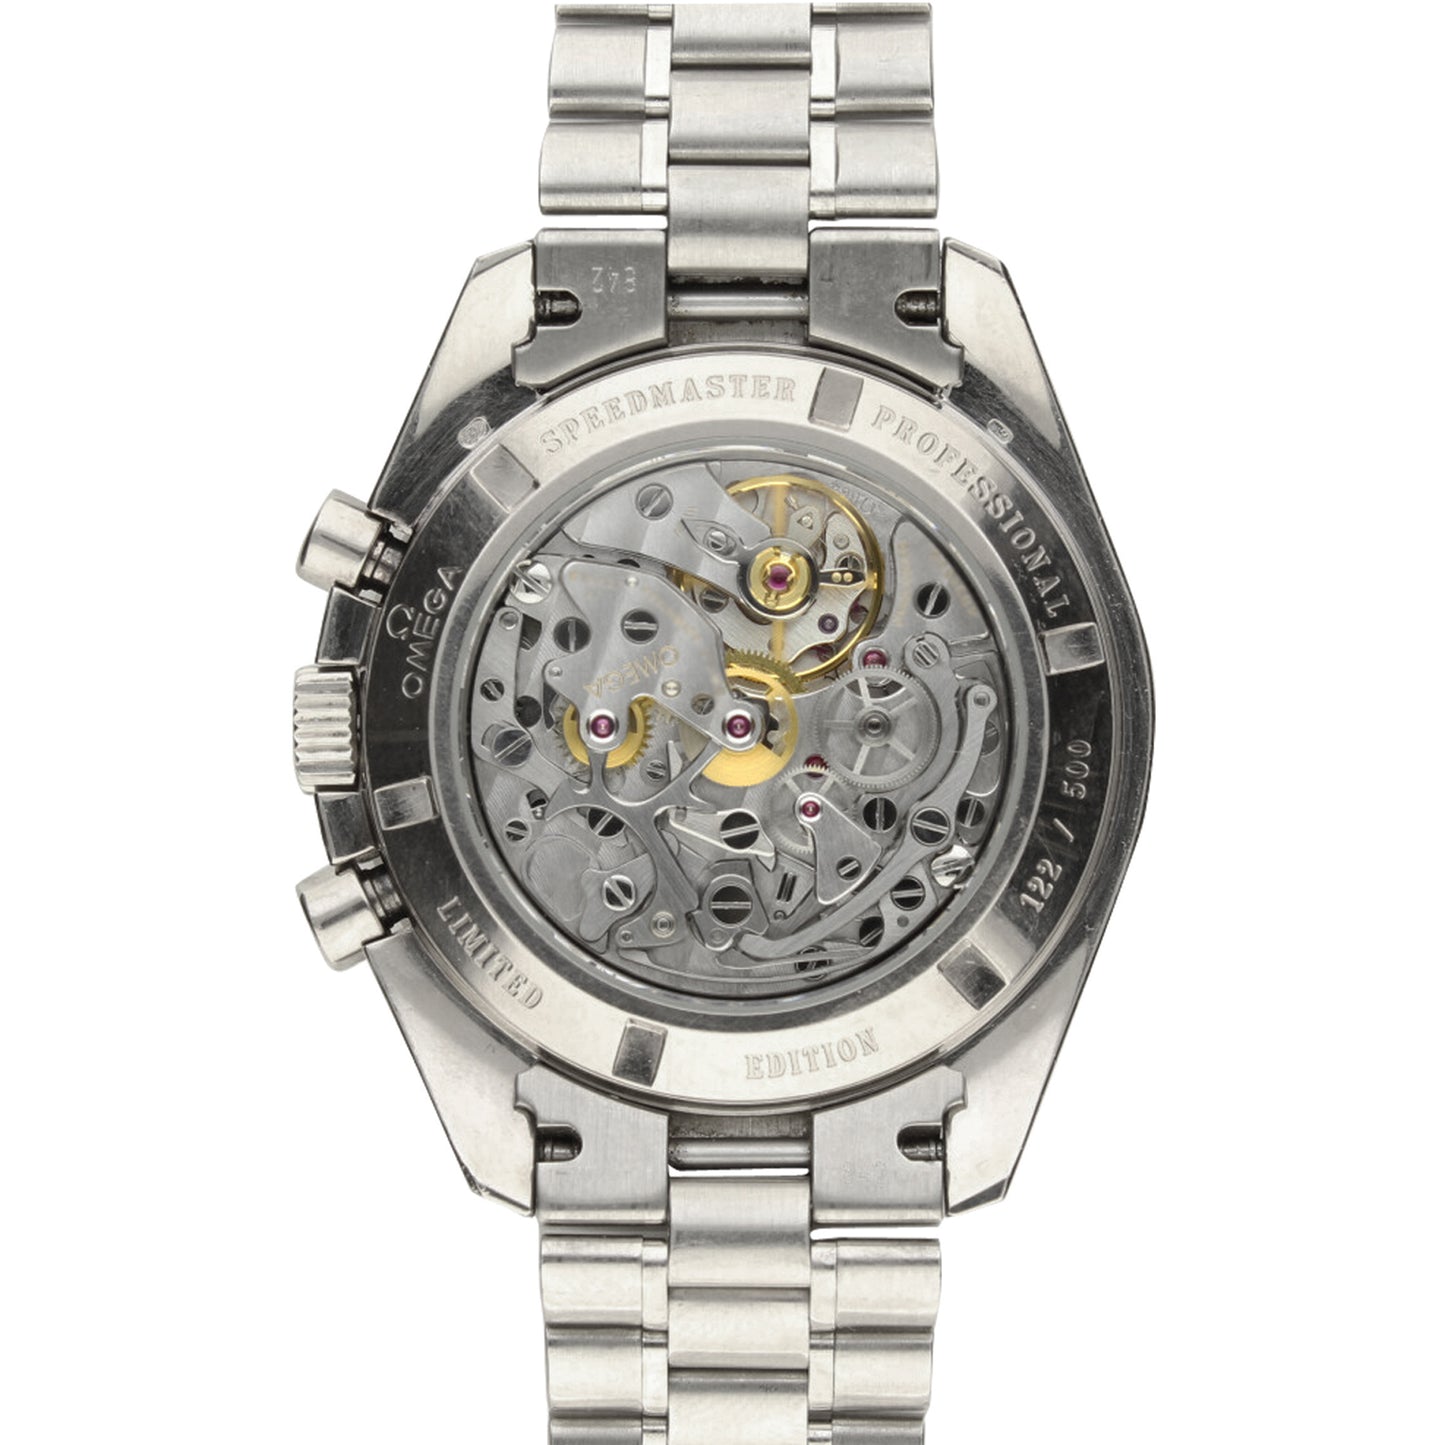 18ct white gold Speedmaster APOLLO XIII professional chronograph wristwatch. Made 1994